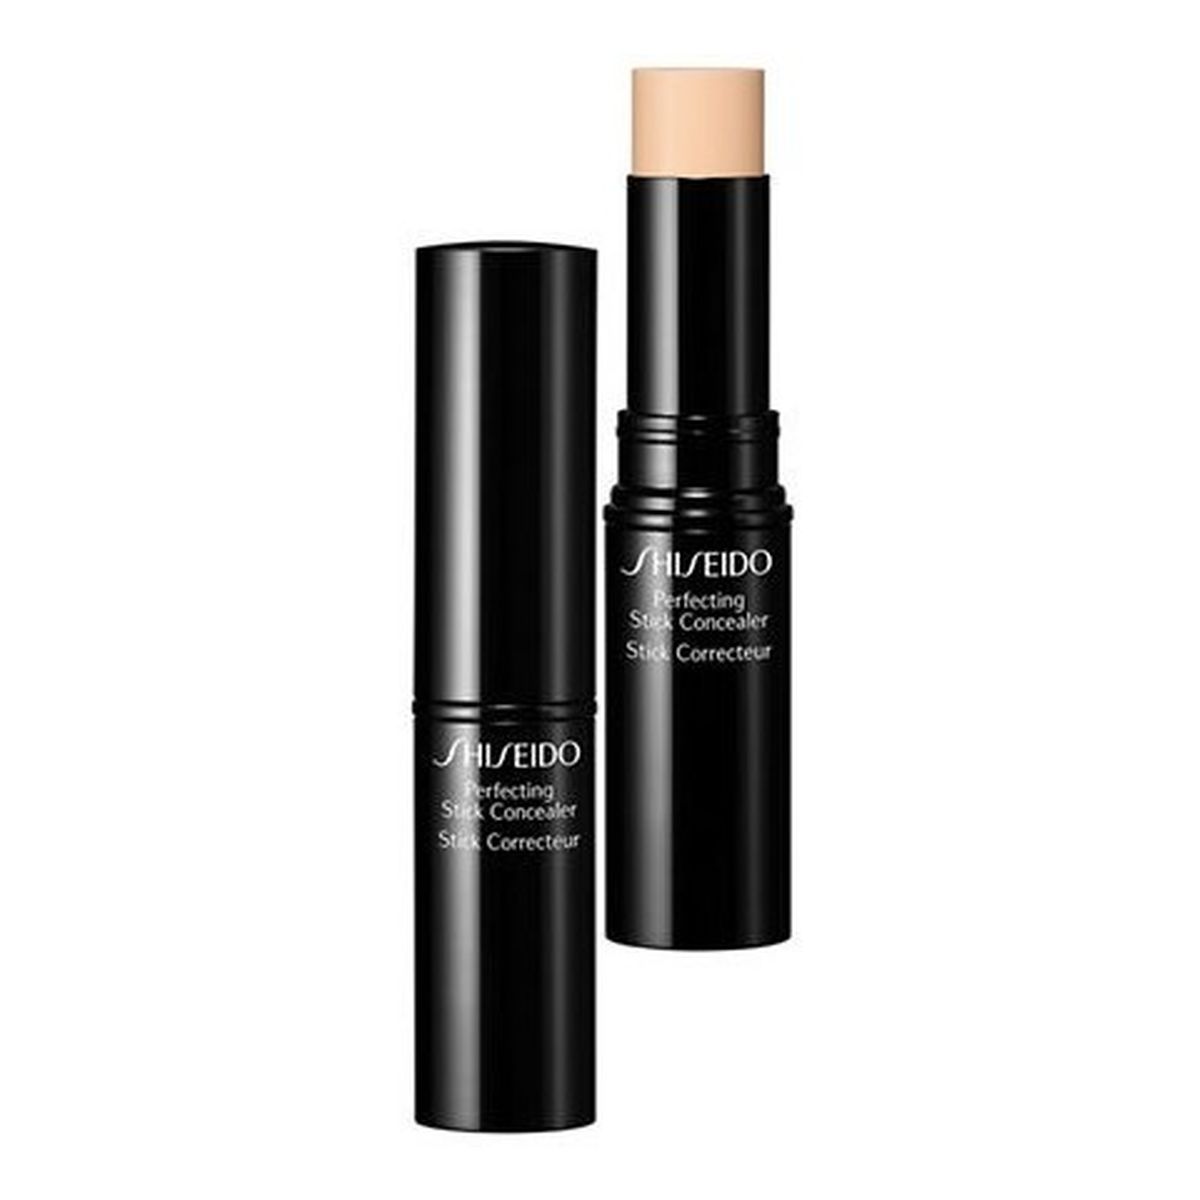 Shiseido Perfecting Stick Concealer Korektor w sztyfcie 5g